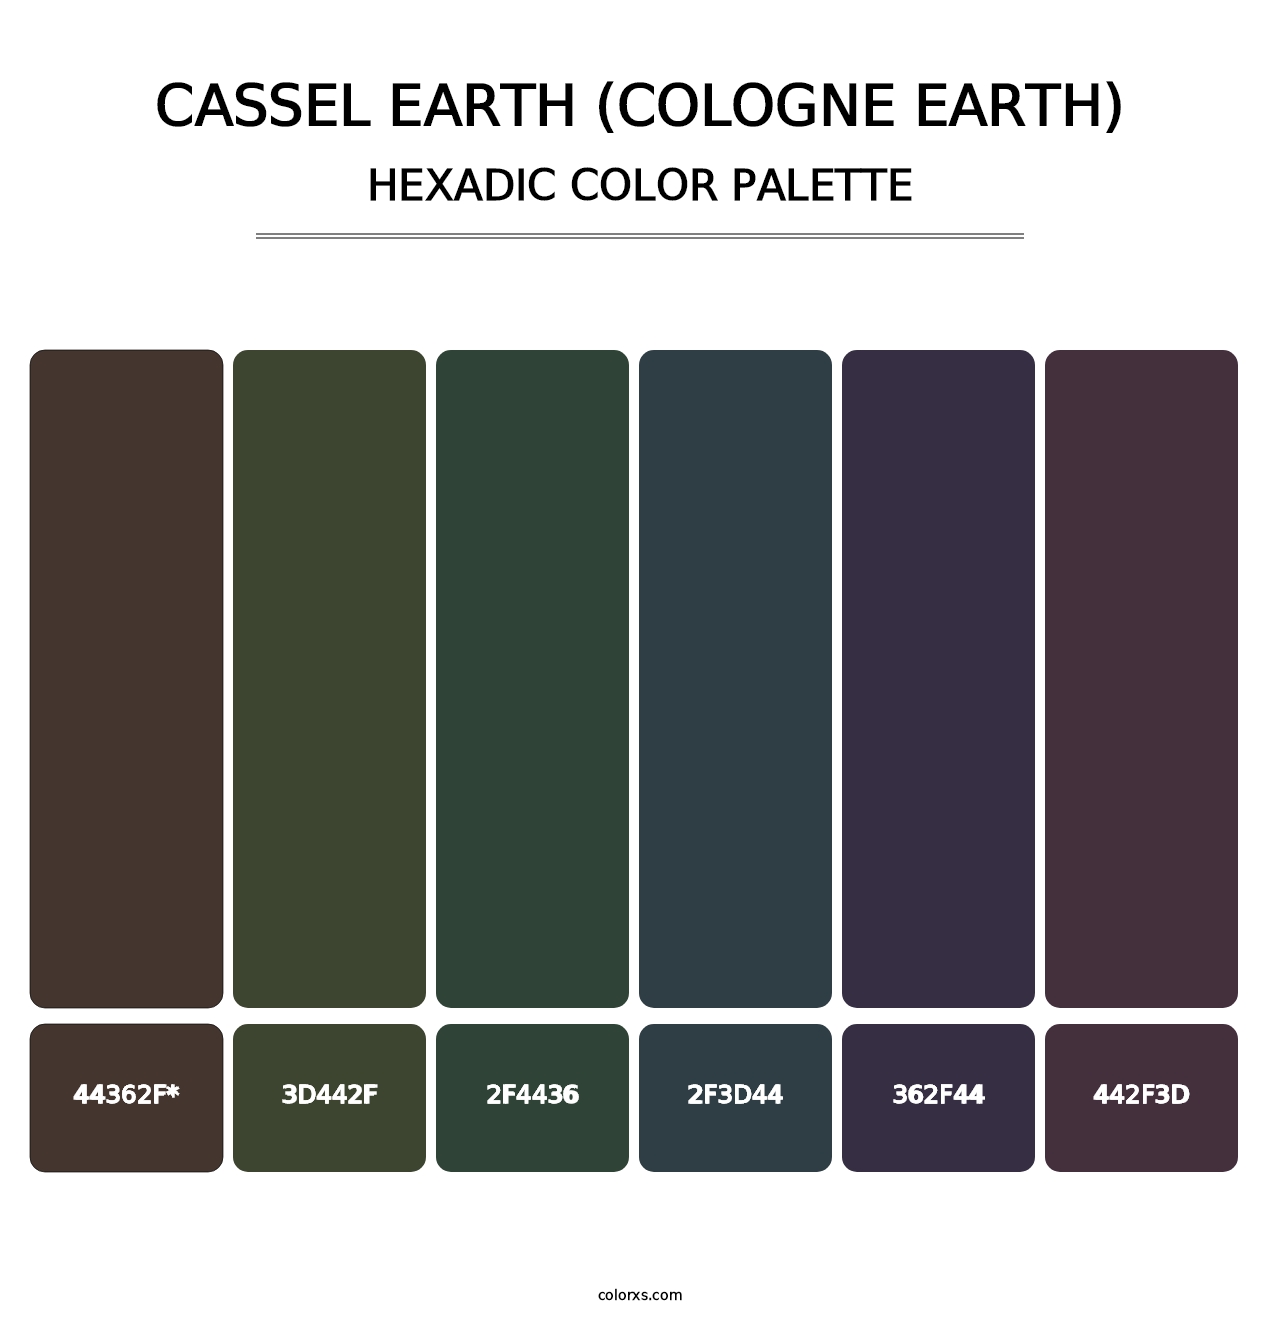 Cassel Earth (Cologne Earth) - Hexadic Color Palette